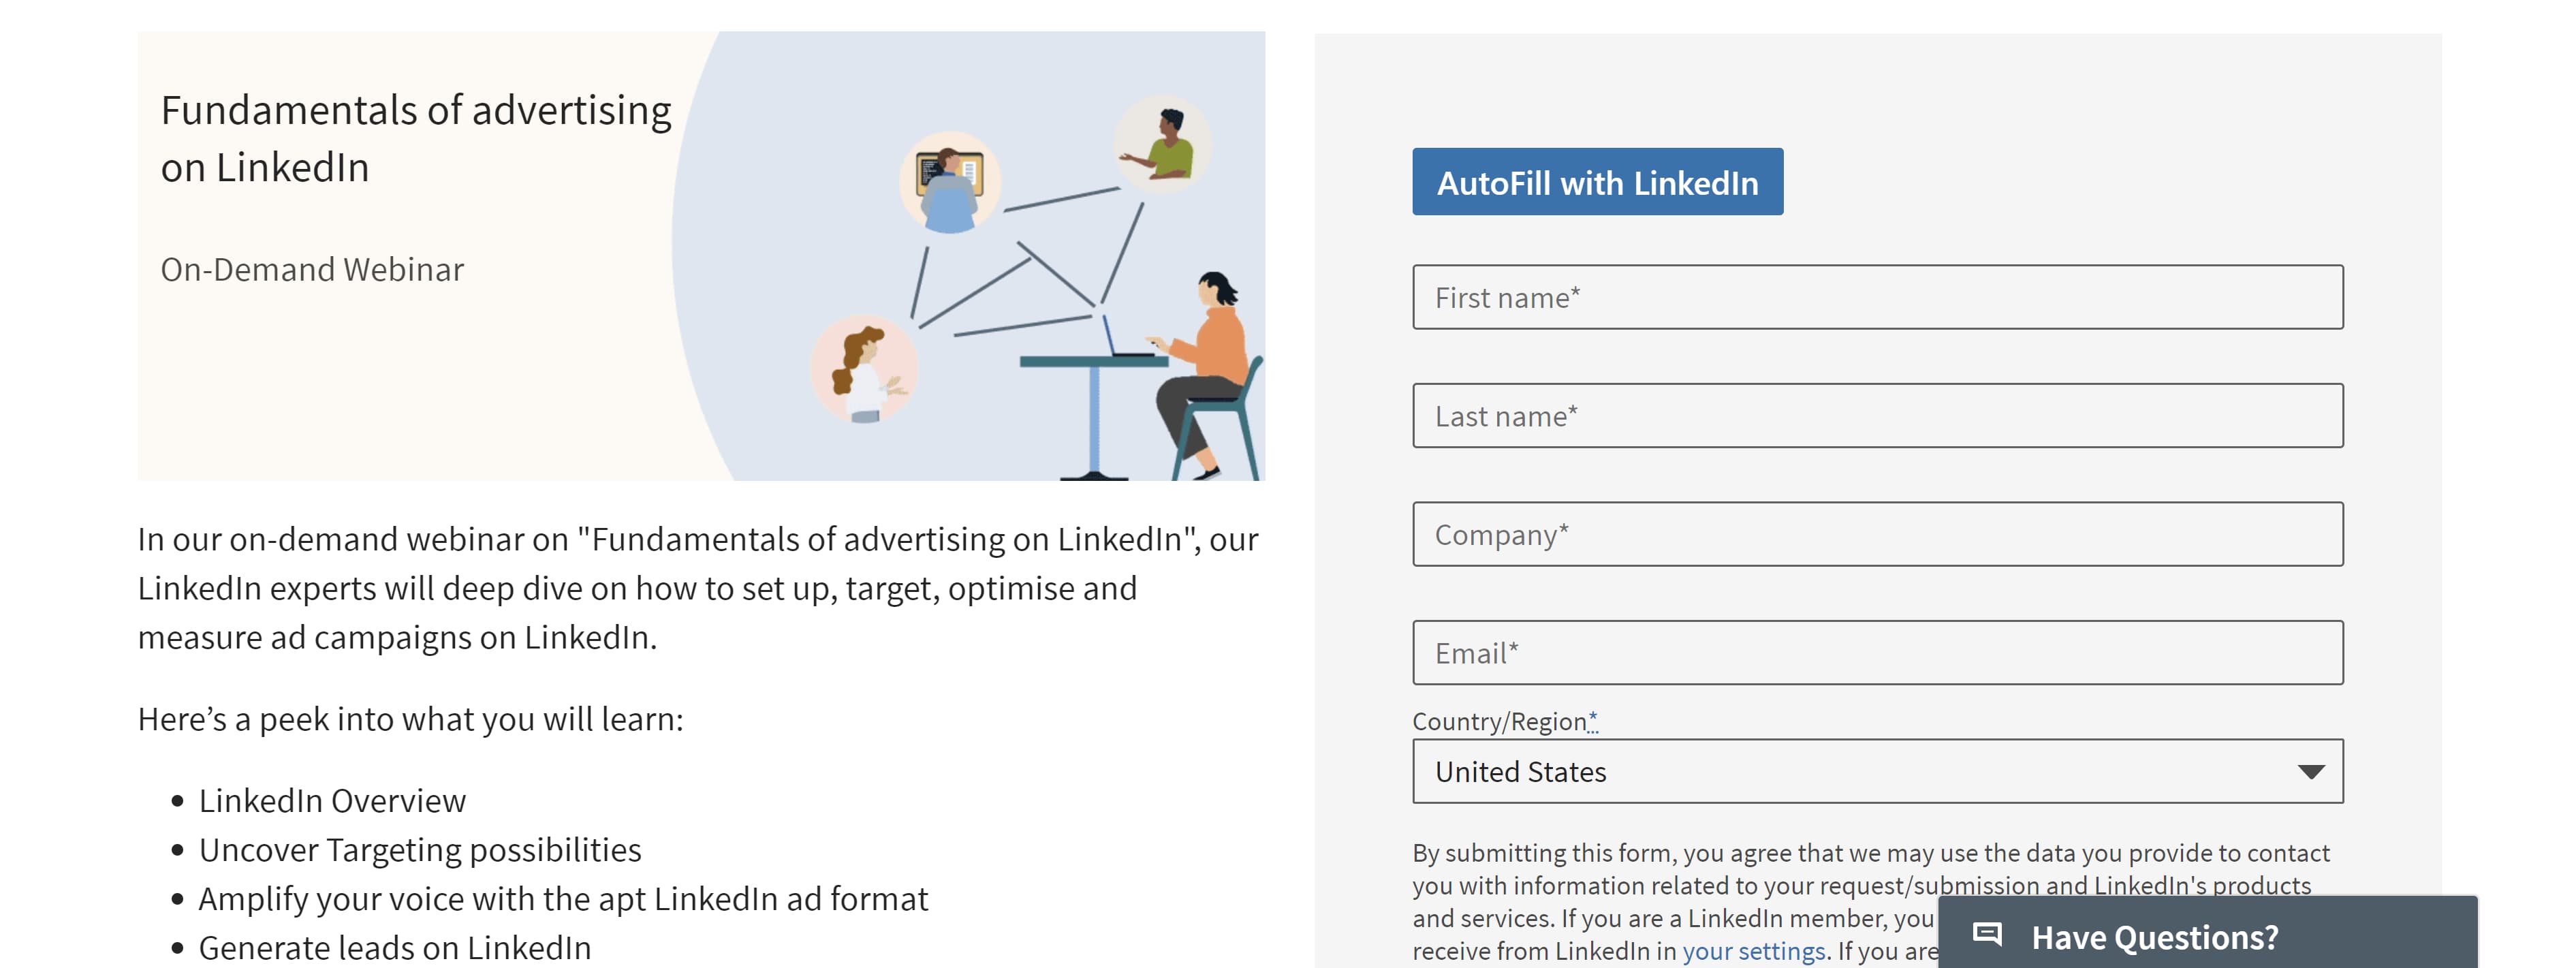 Webinar landing page example from LinkedIn